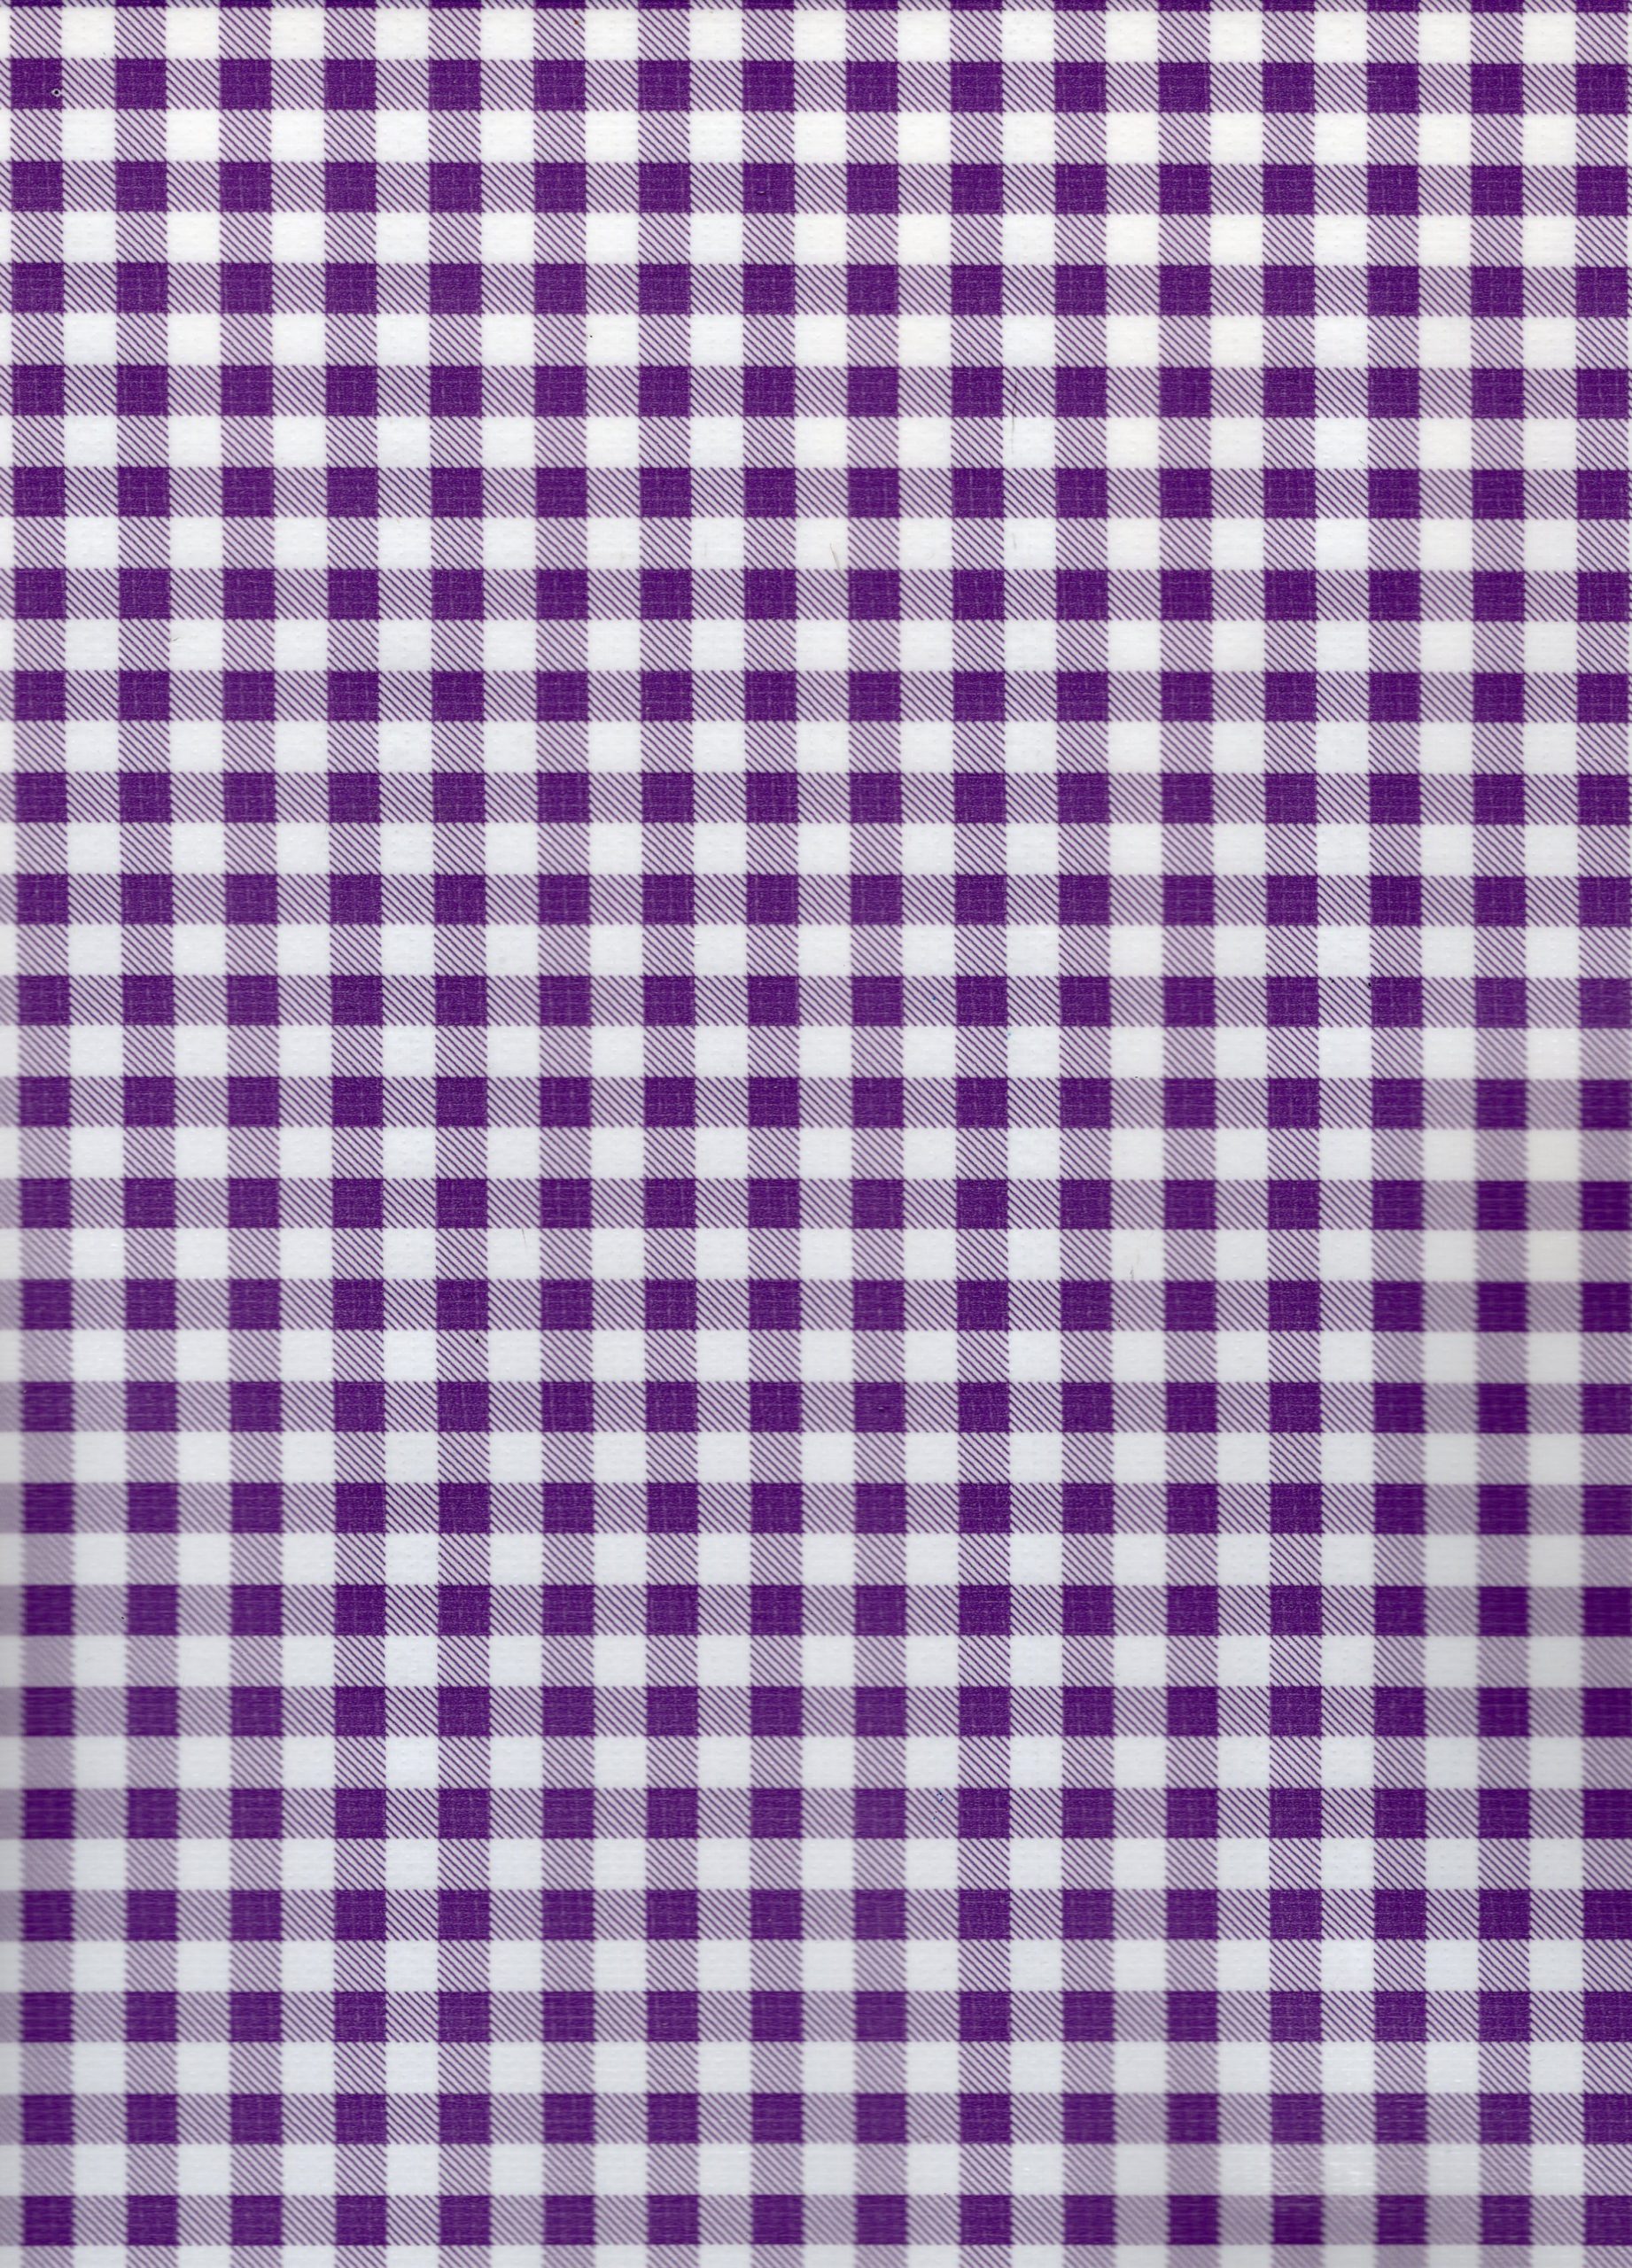 Lv purple vinyl fabric such as denim